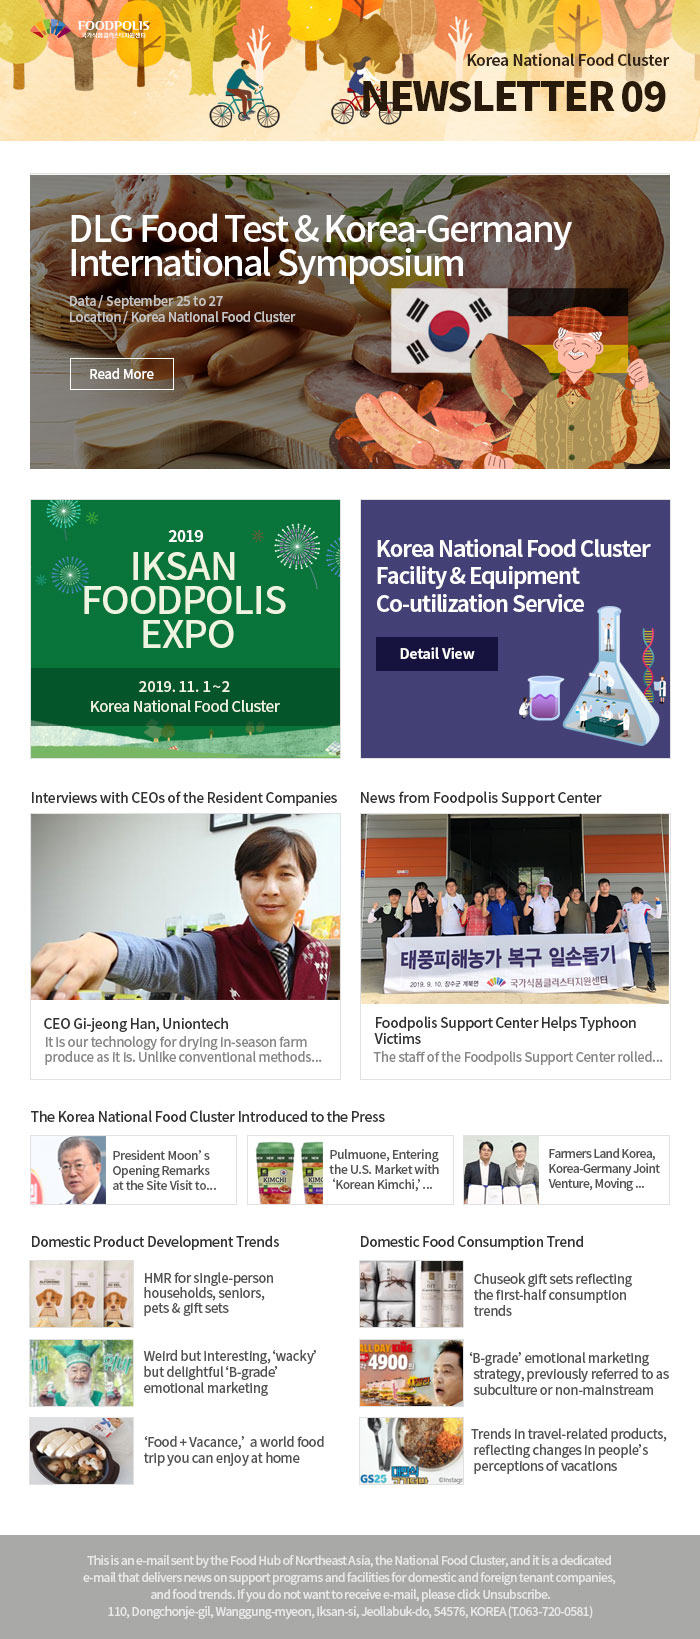 2018 September News Letter from the Korea National Food Cluster